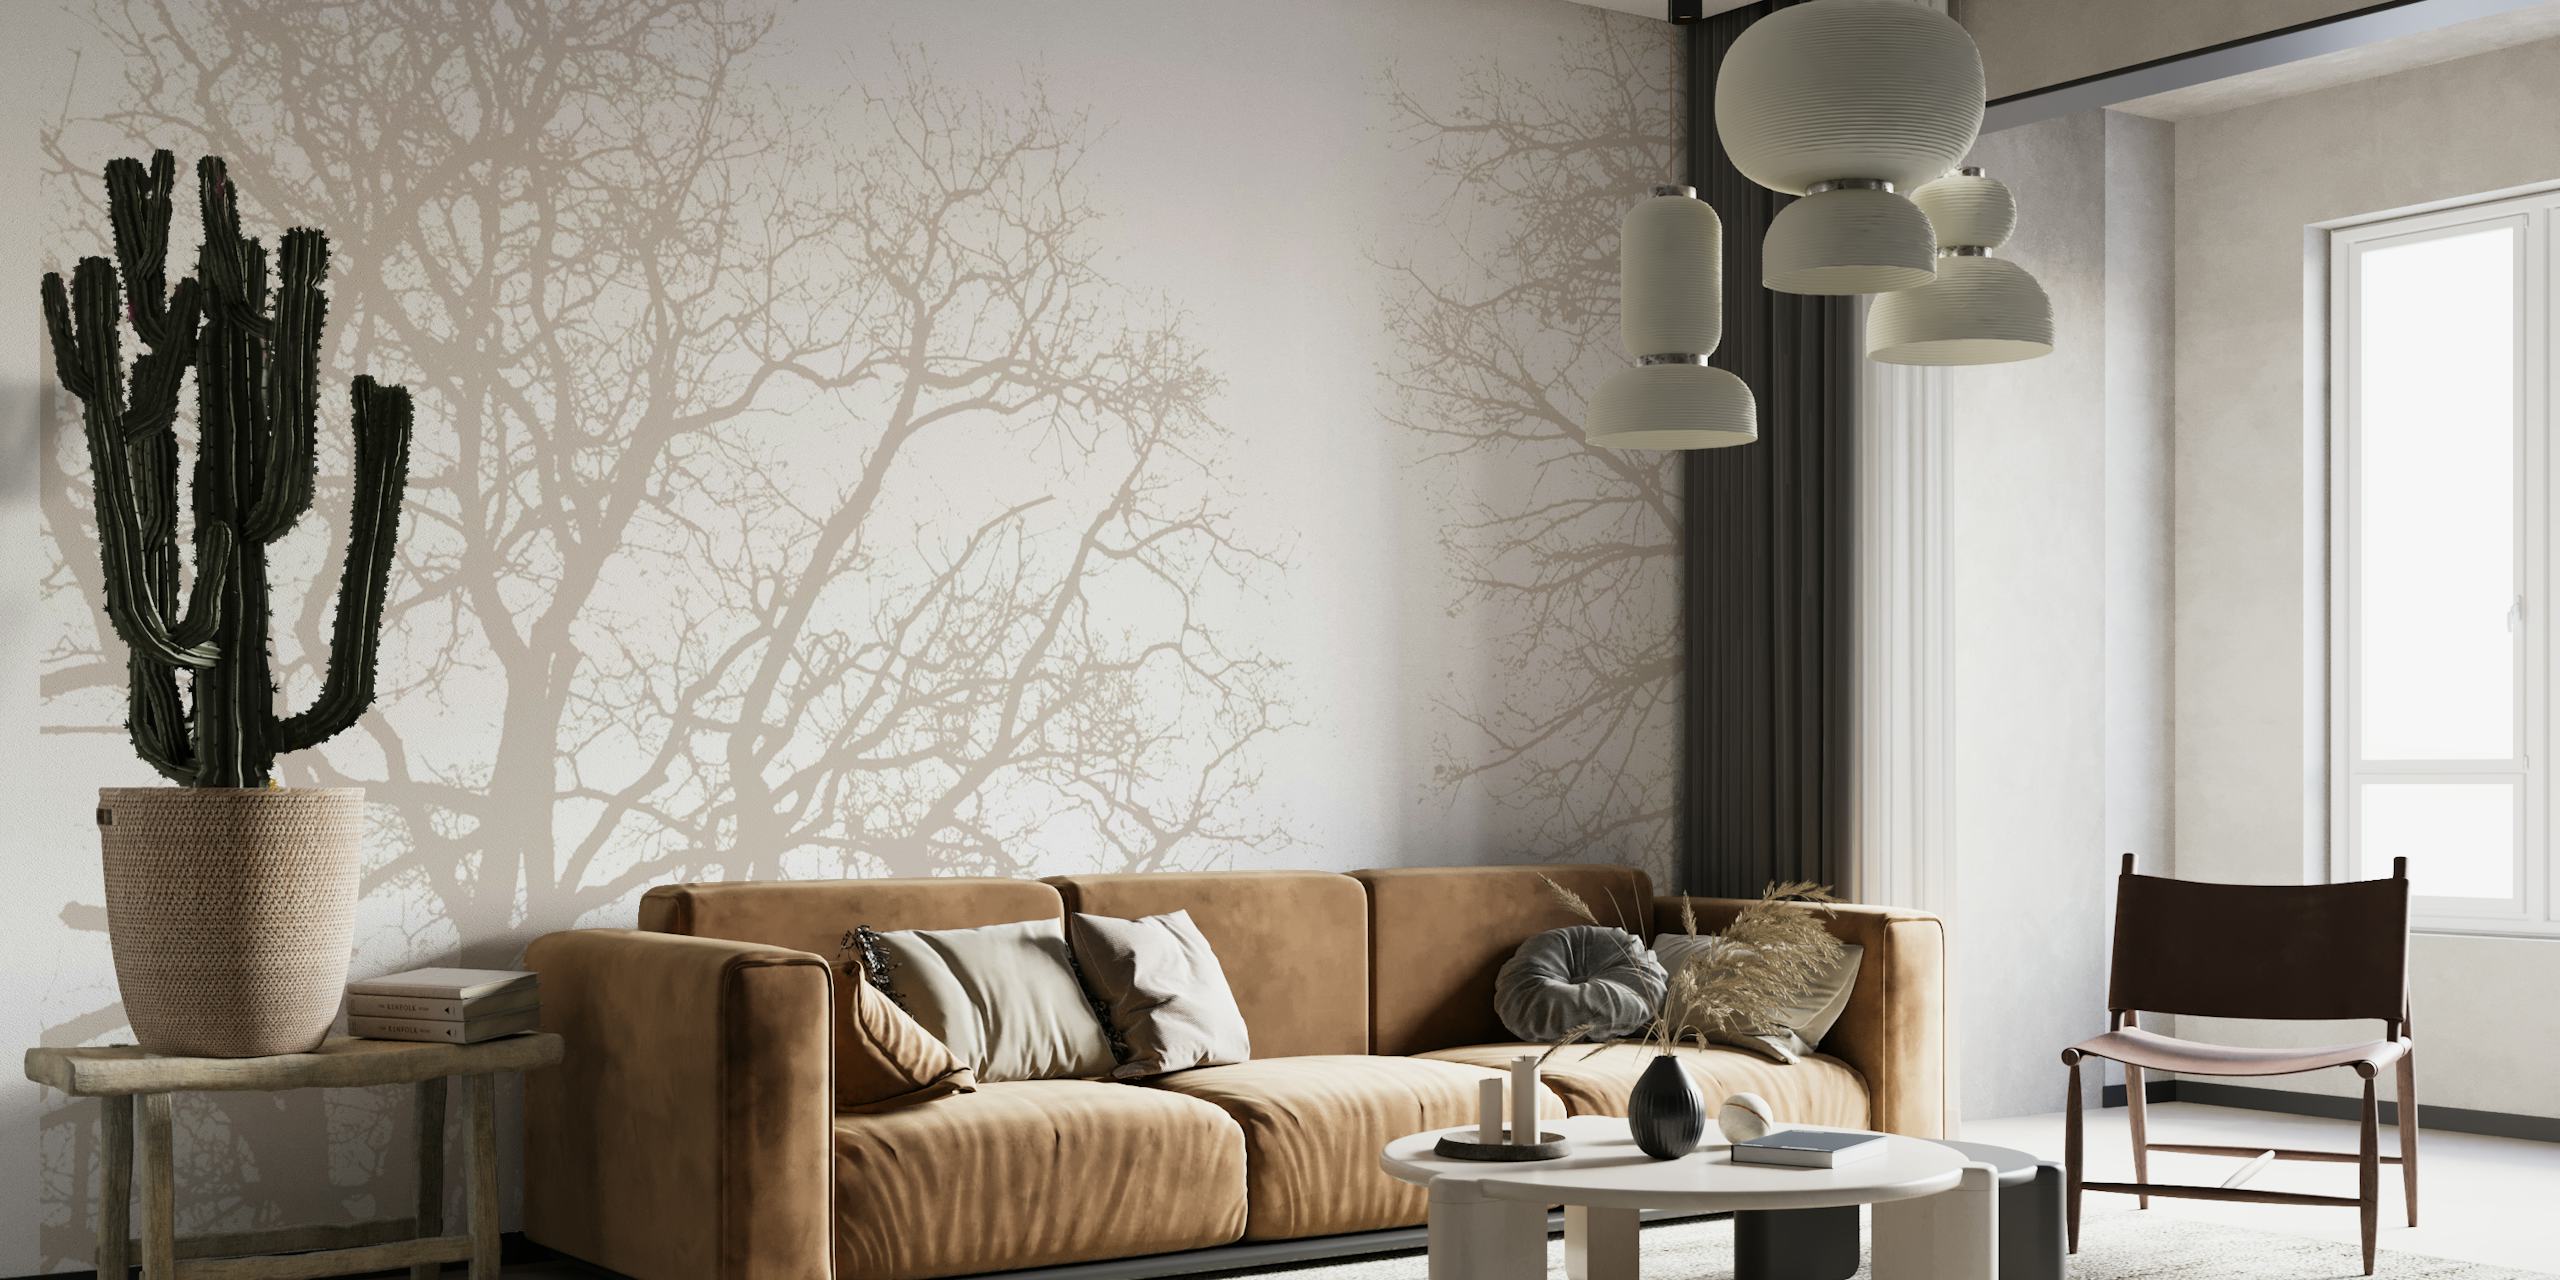 Tree Silhouettes 3 wallpaper